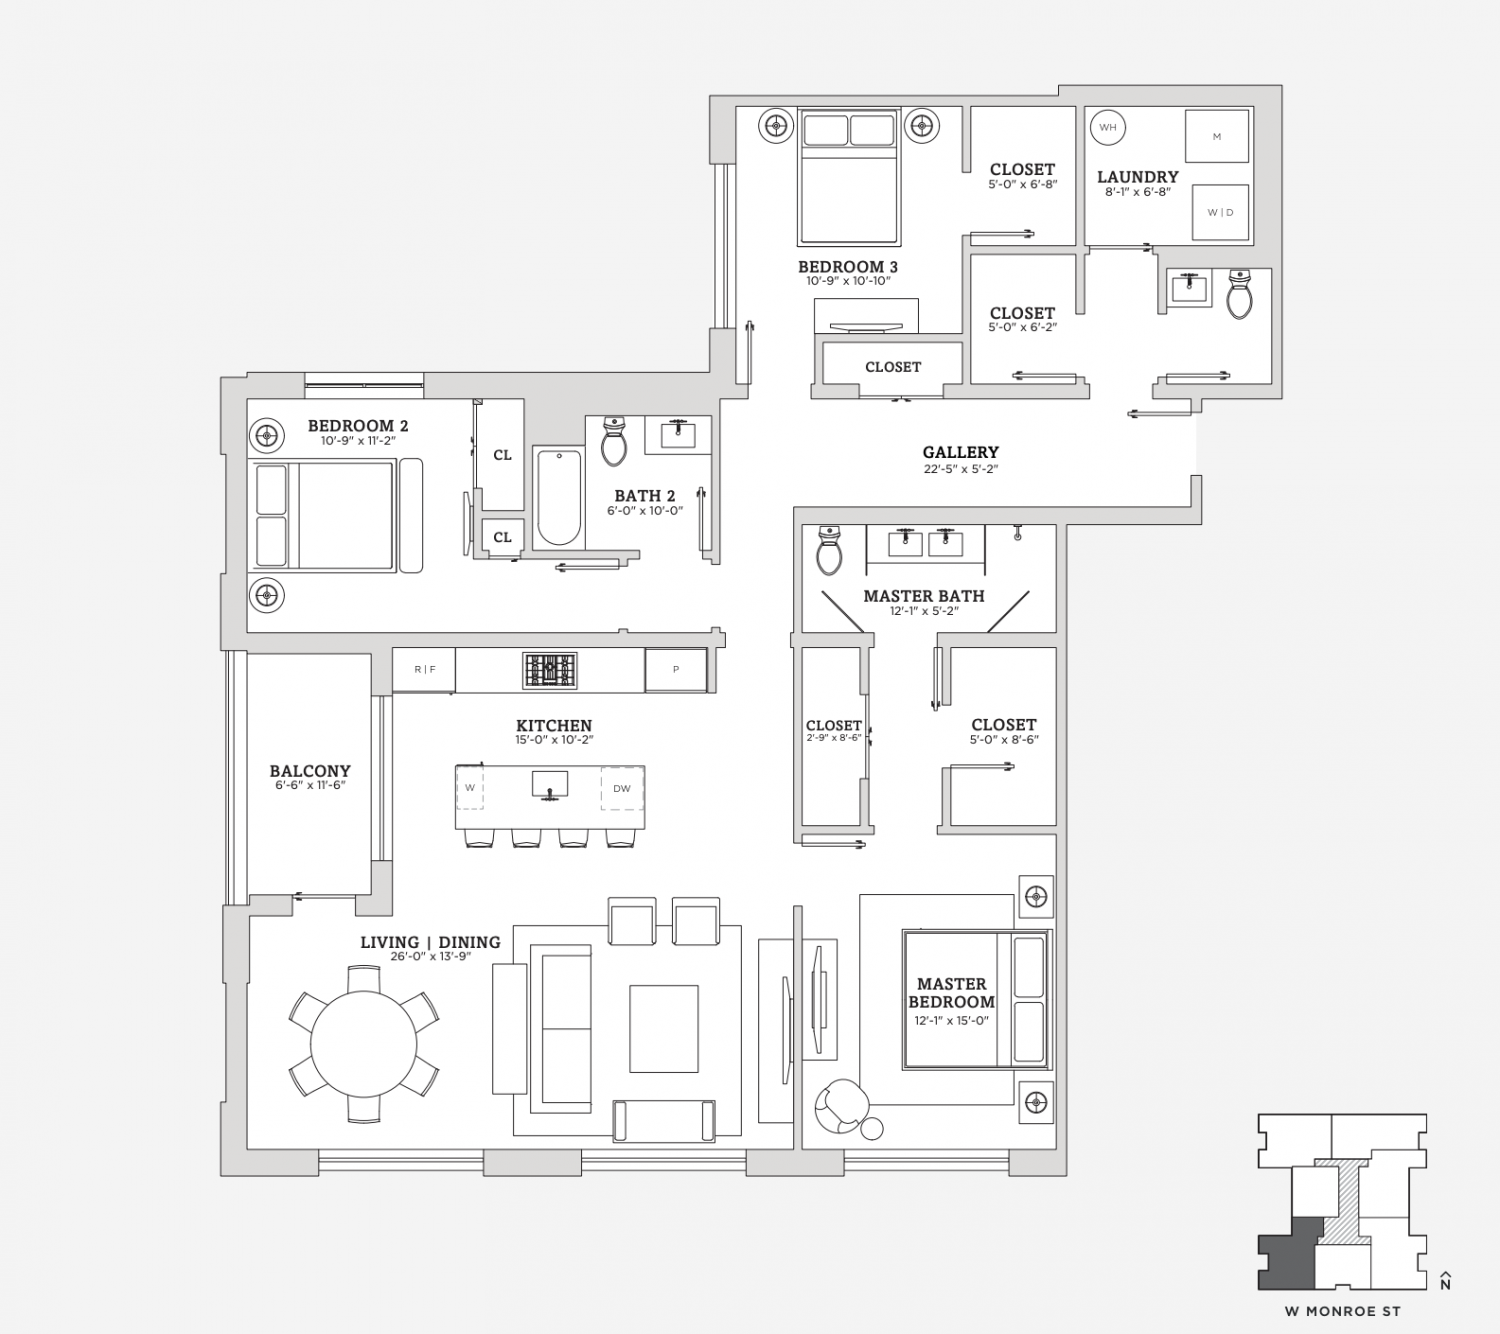 1404 W Monroe Street: Three-bedroom floor plan